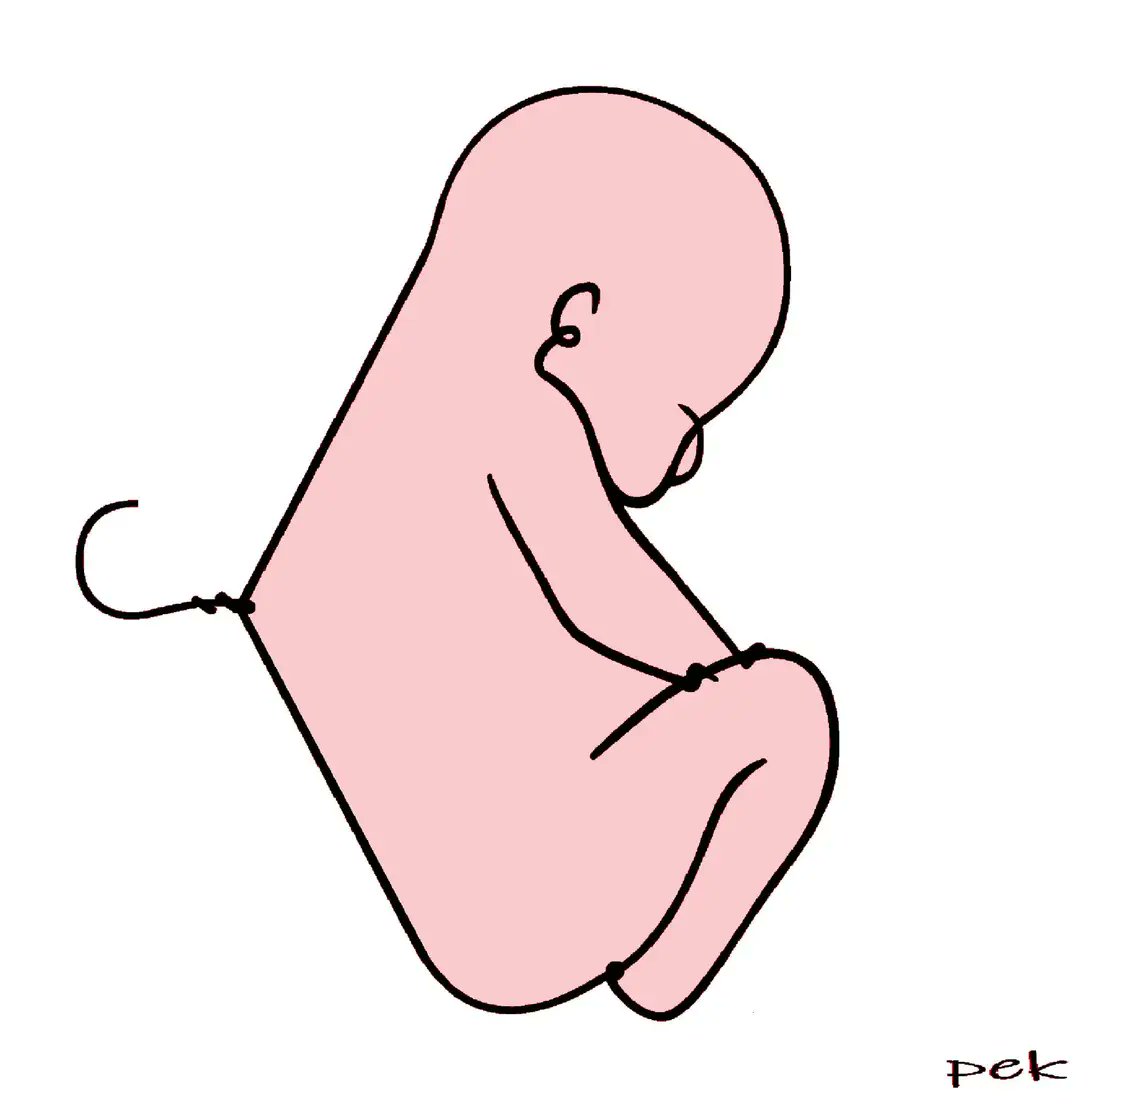 “Choose… Life.”

#roevwade
#abortionismurder